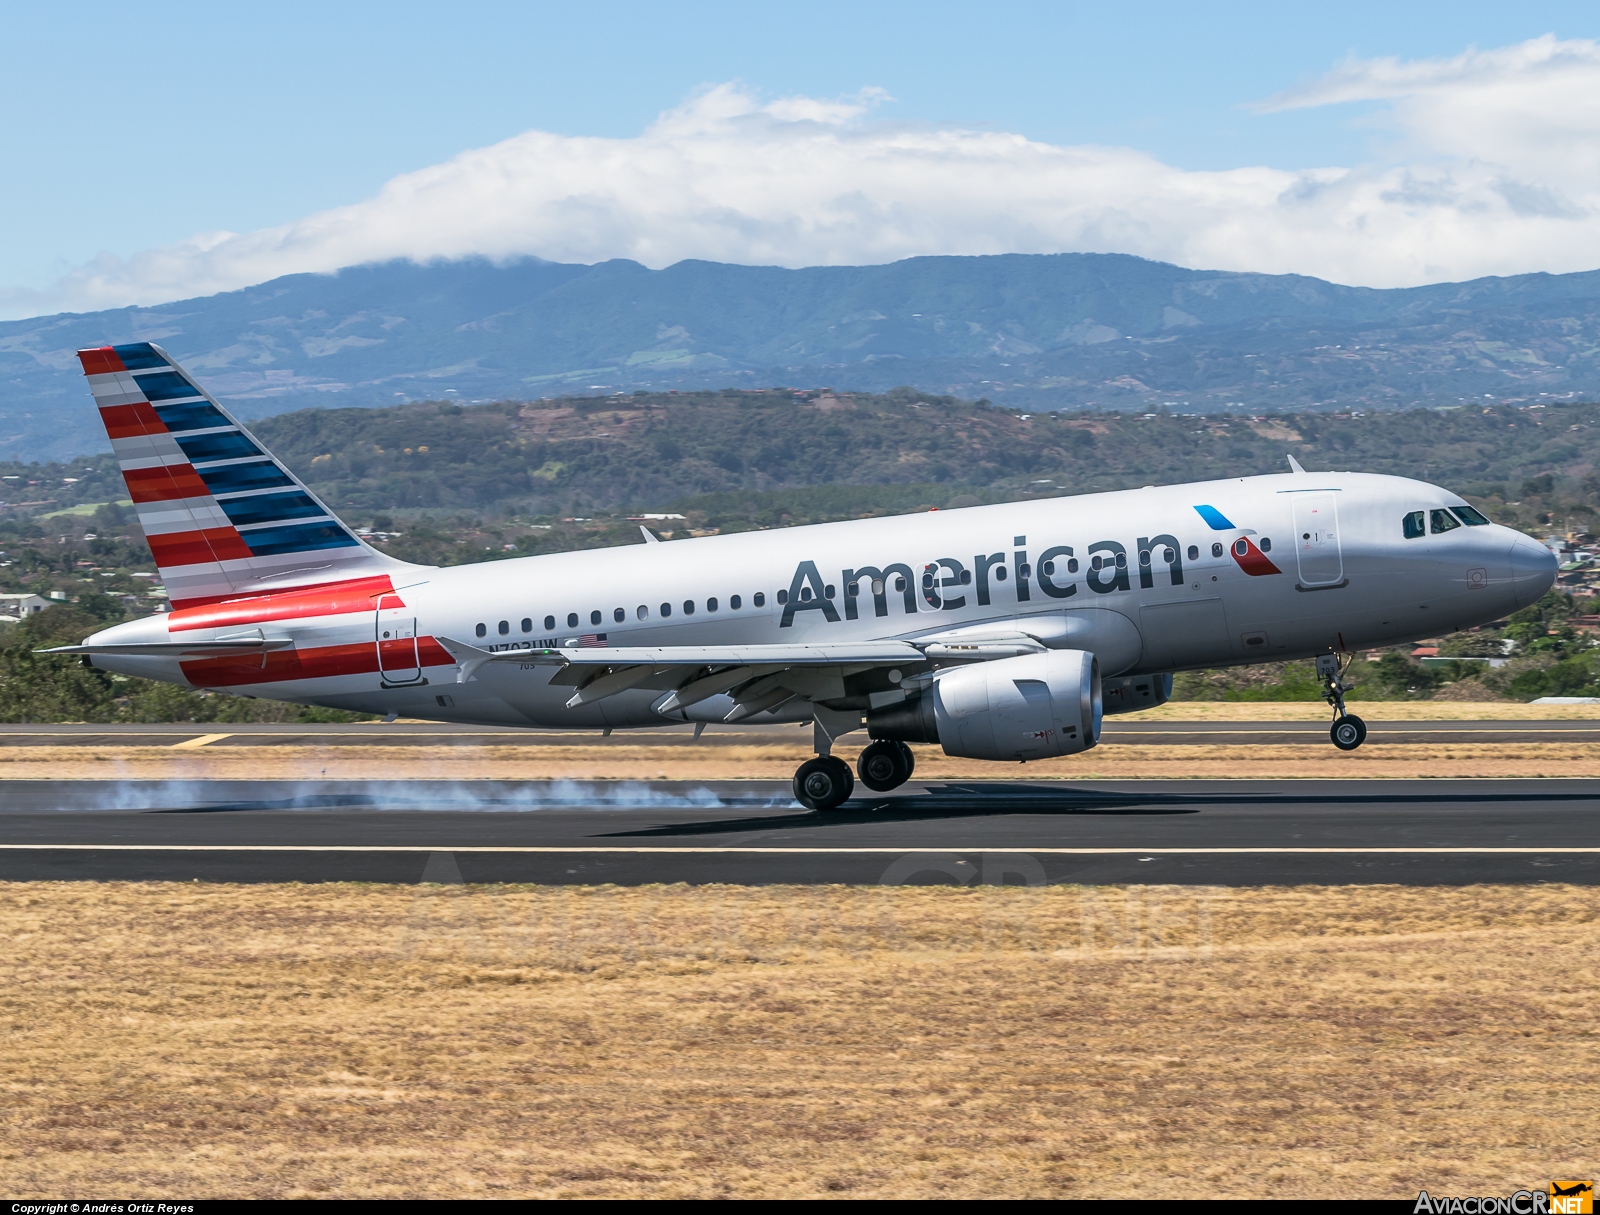 N703UW - Airbus A319-112 - American Airlines